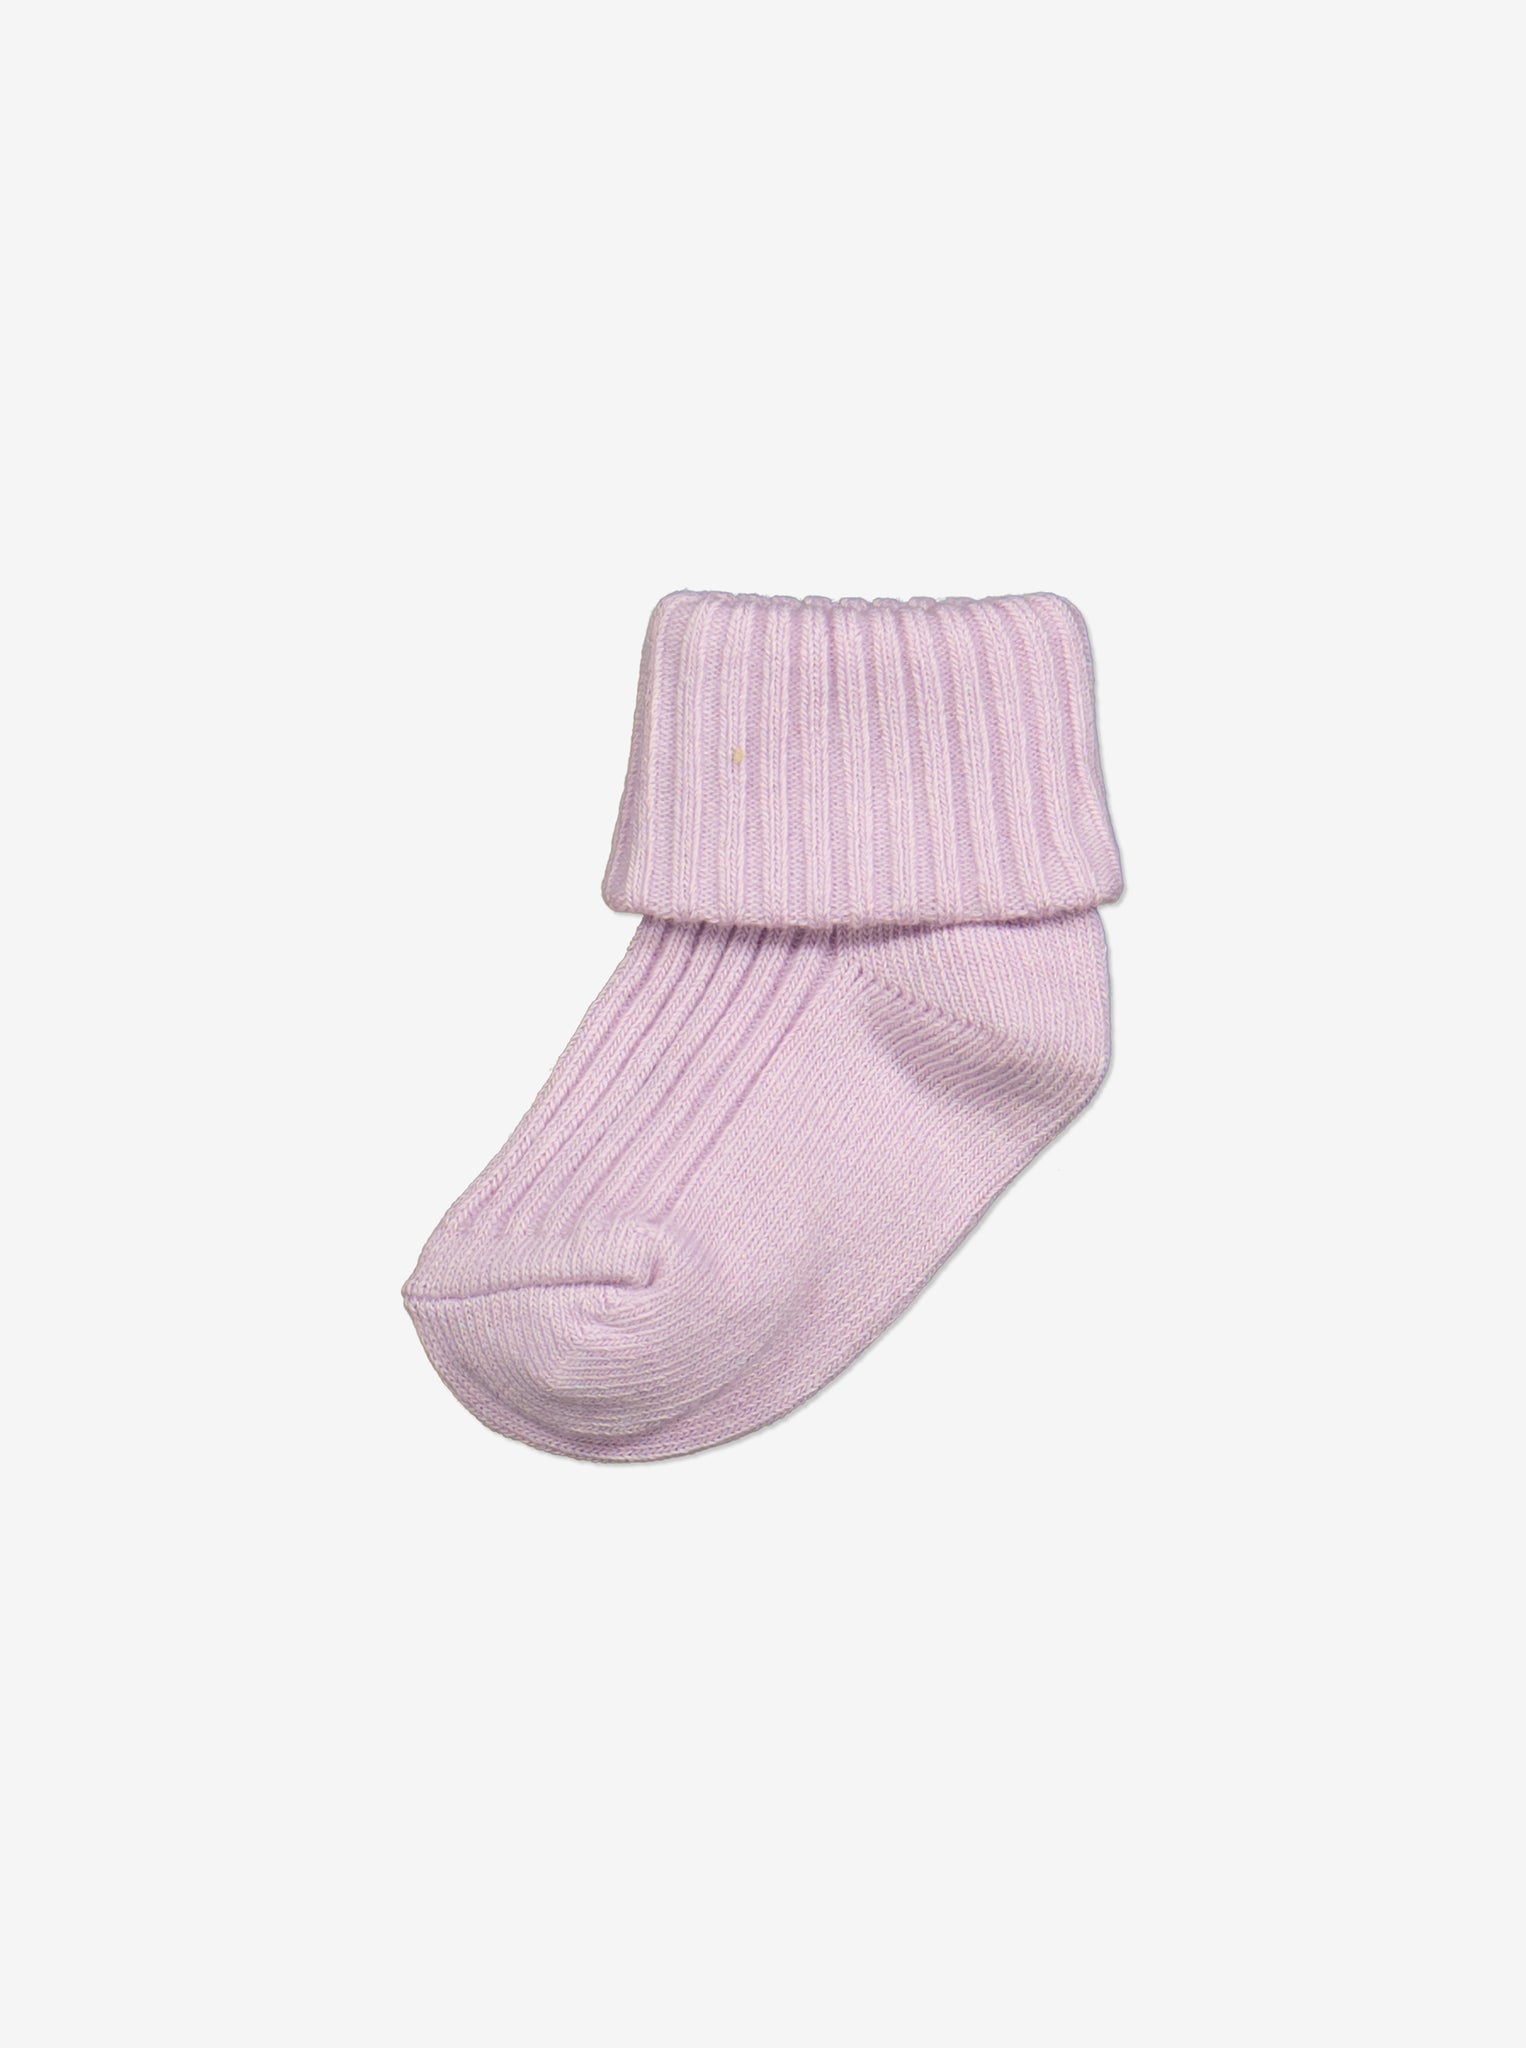 Soft Baby Socks